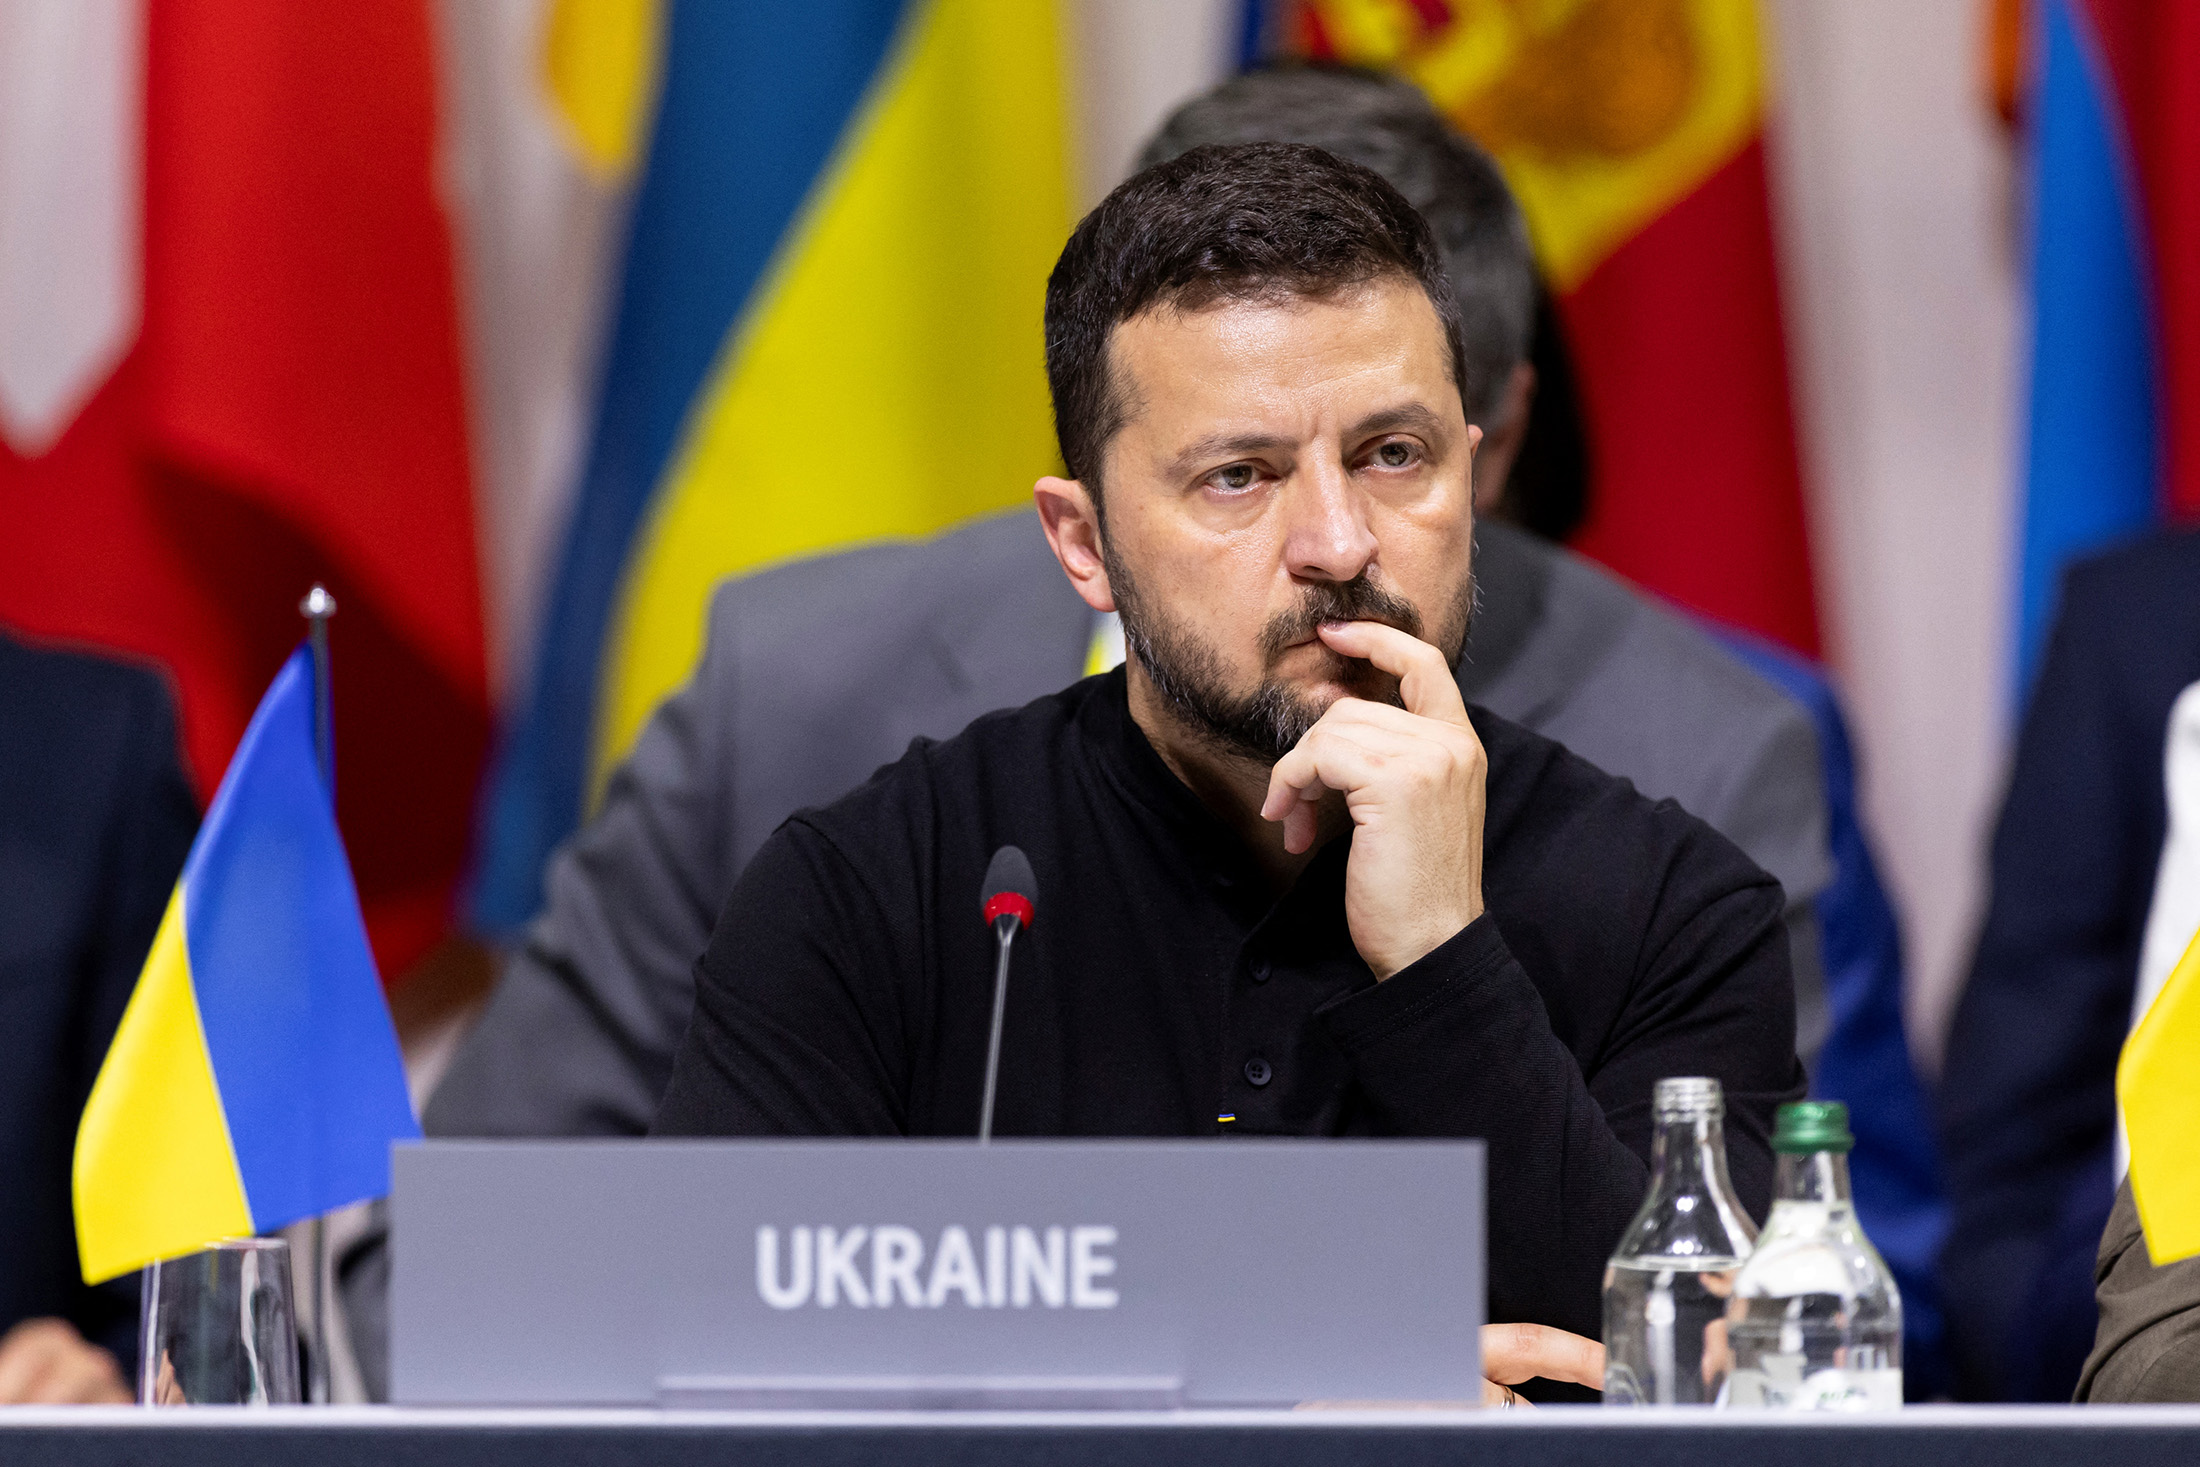 Volodymyr Zelenskiy attends the Summit on peace in Ukraine, at the Burgenstock resort near Lucerne, Switzerland, on June 15.